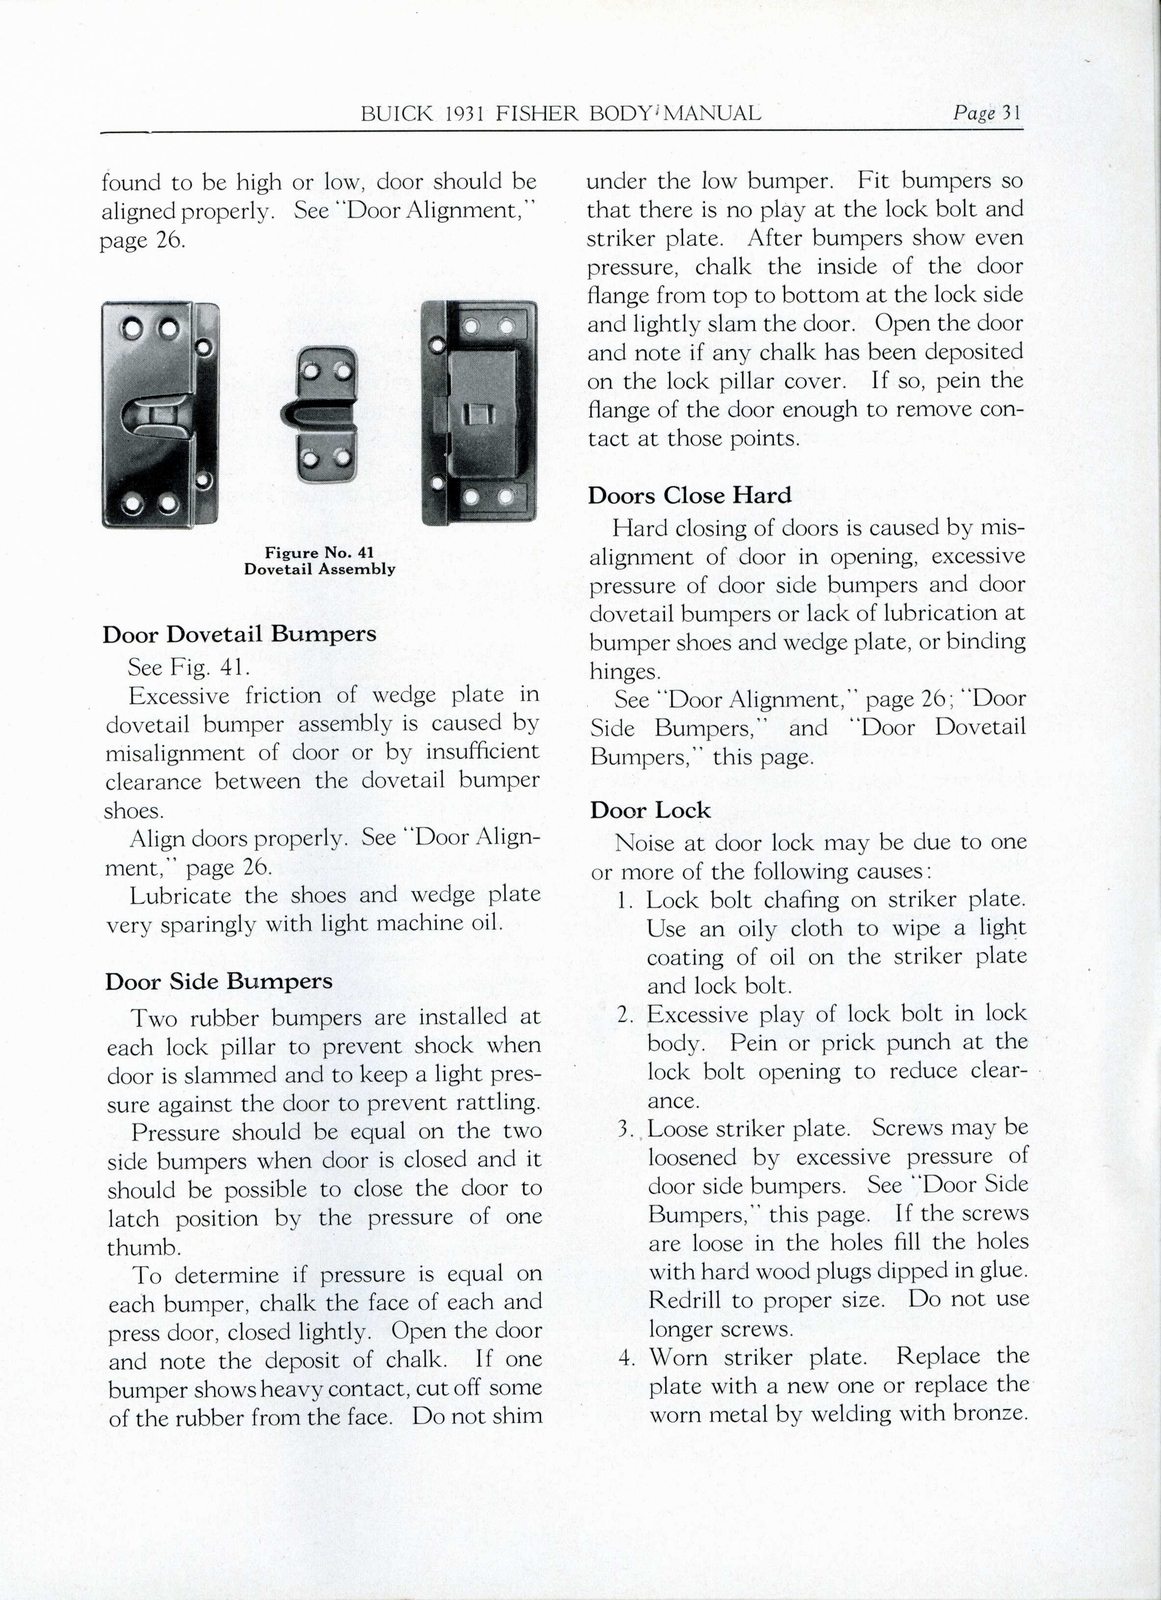 n_1931 Buick Fisher Body Manual-31.jpg